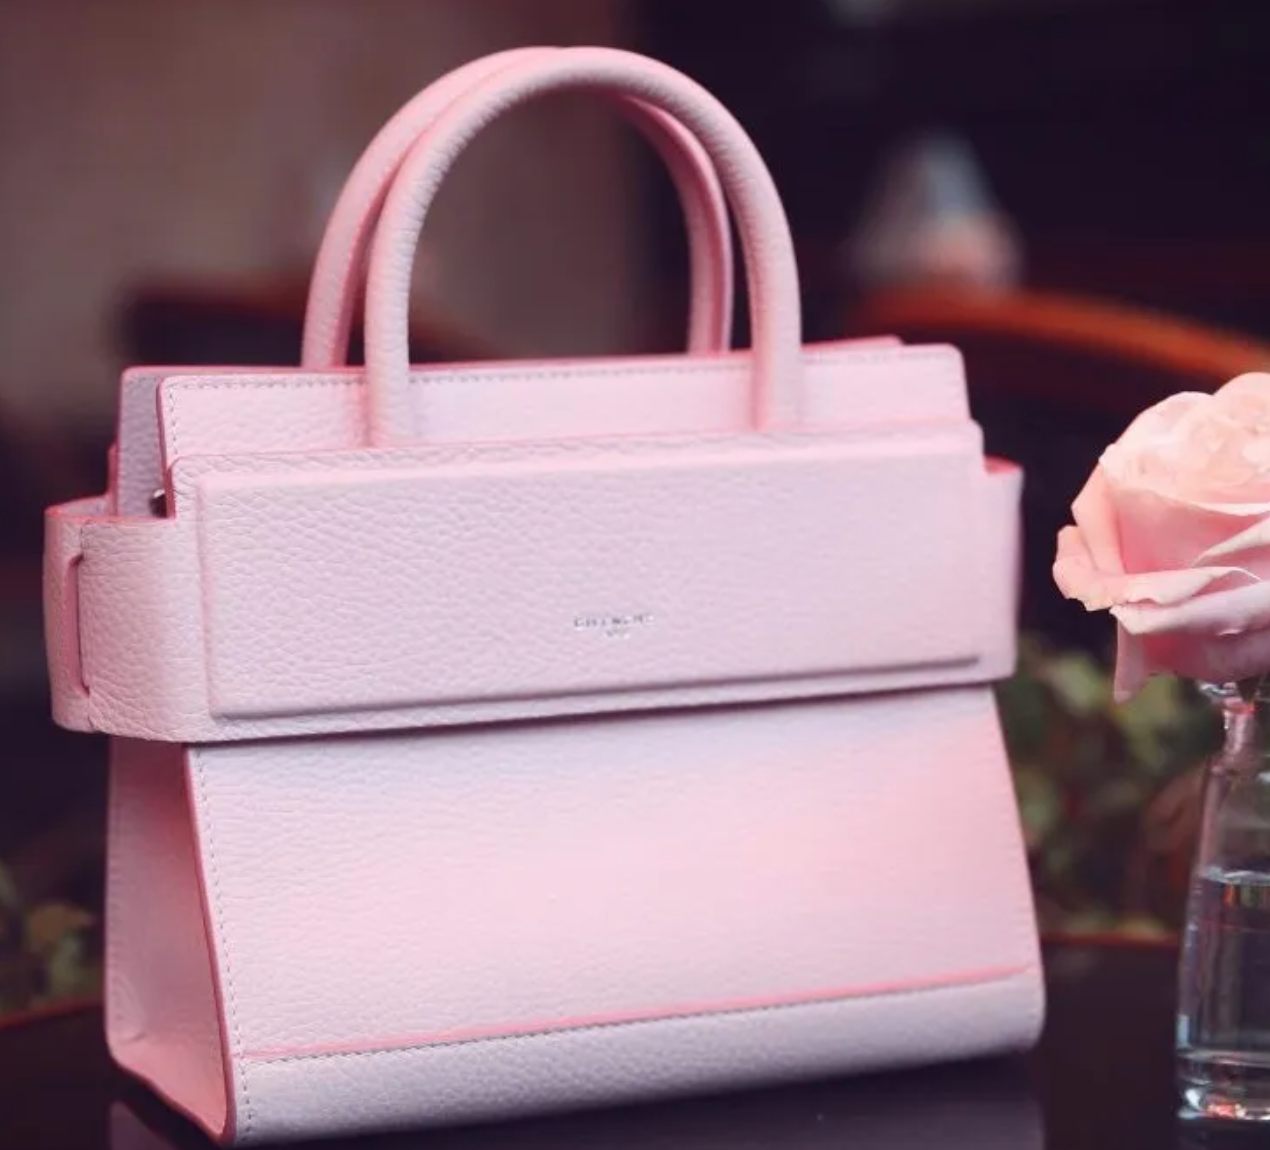 Givenchy x Mr. Bags Mini Horizon handbag.